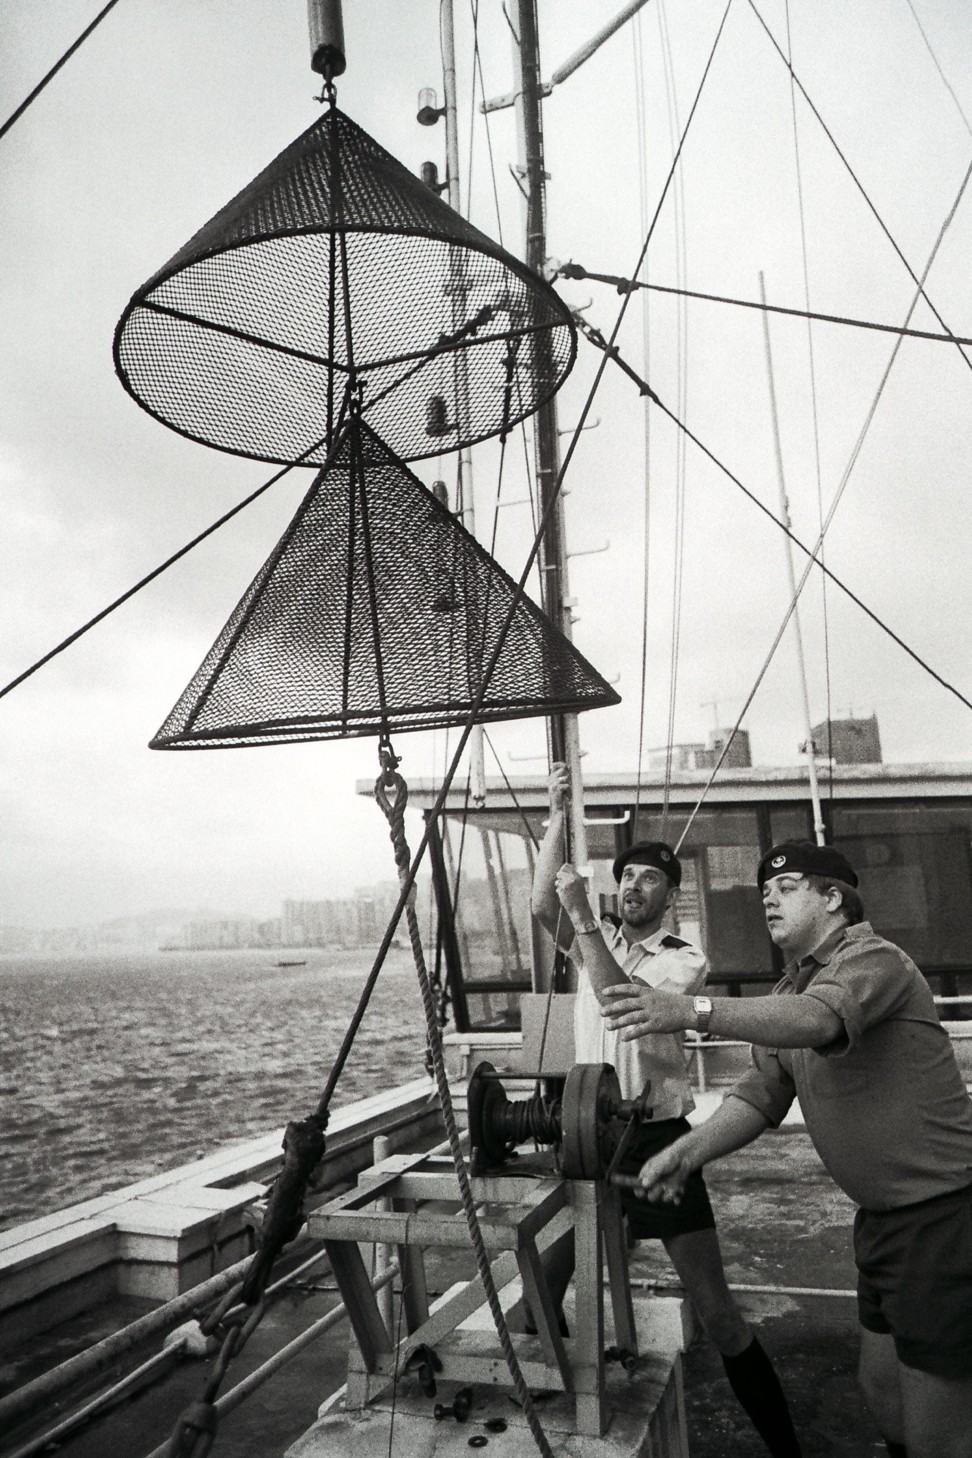 A typhoon signal No 8 is hoisted on the HMS Tamar.